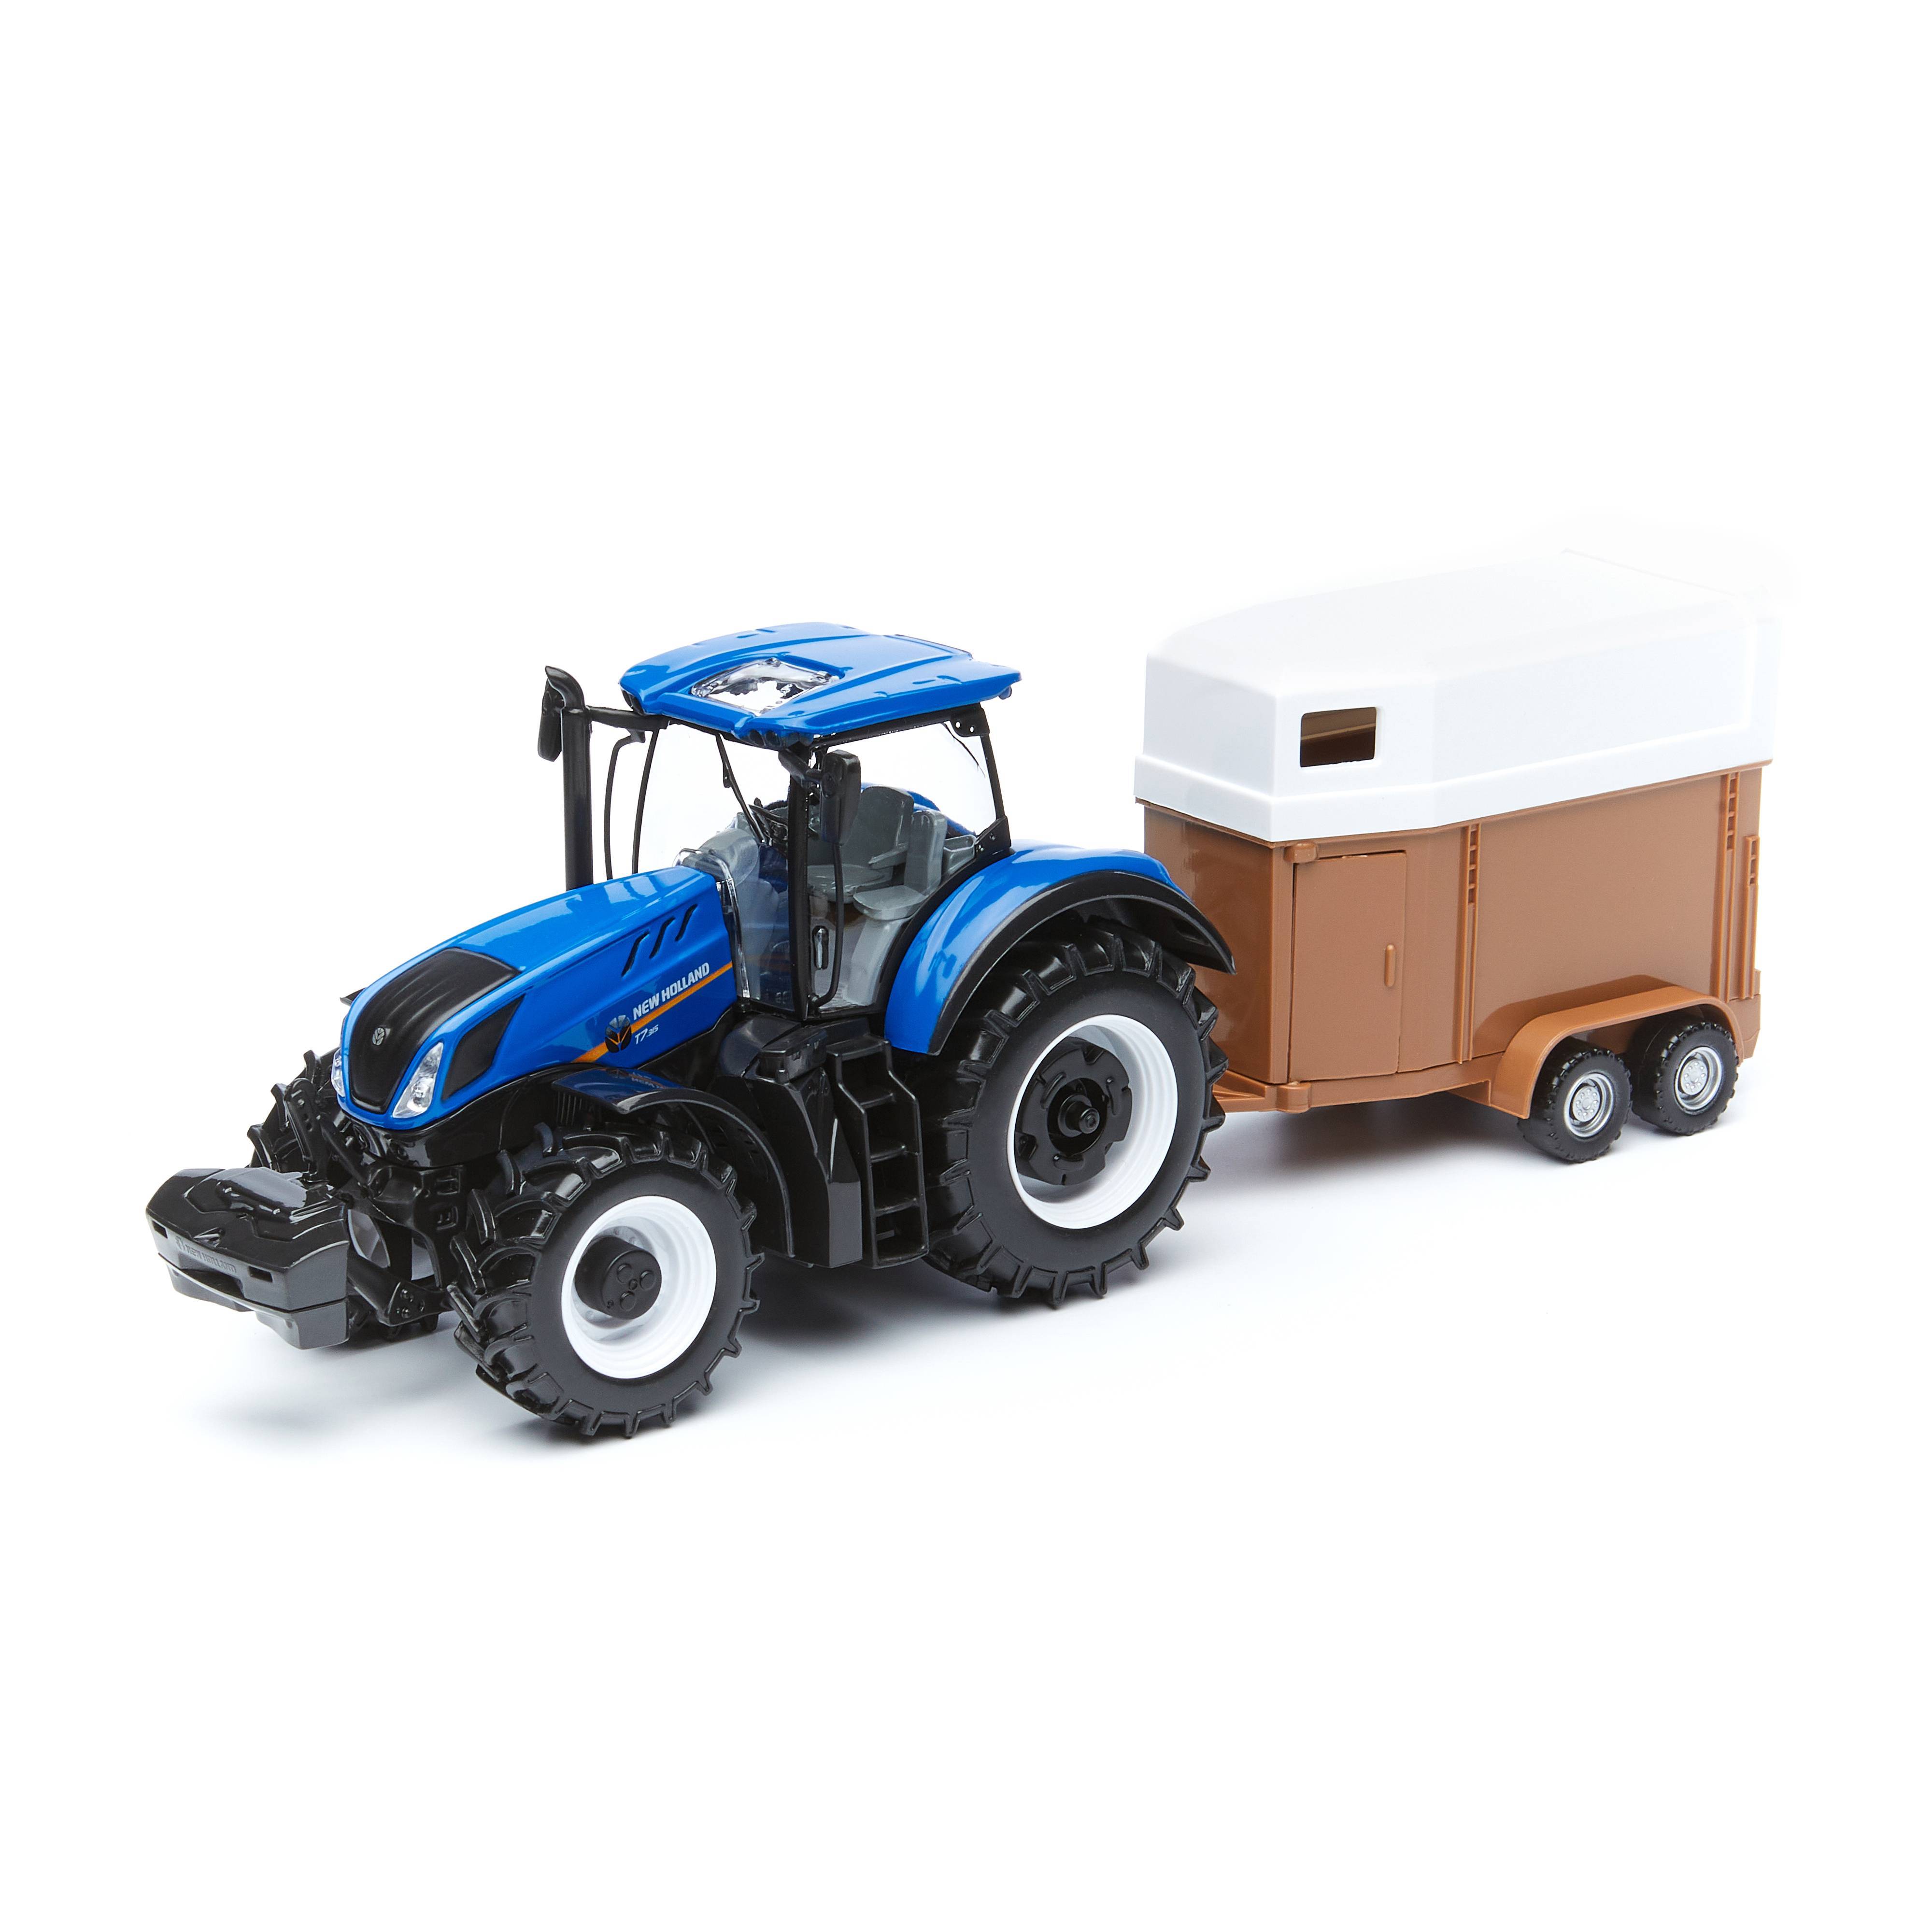 фото Коллекционный трактор bburago bb 18-44060 1:32 holland farm tractor with trailer, синий